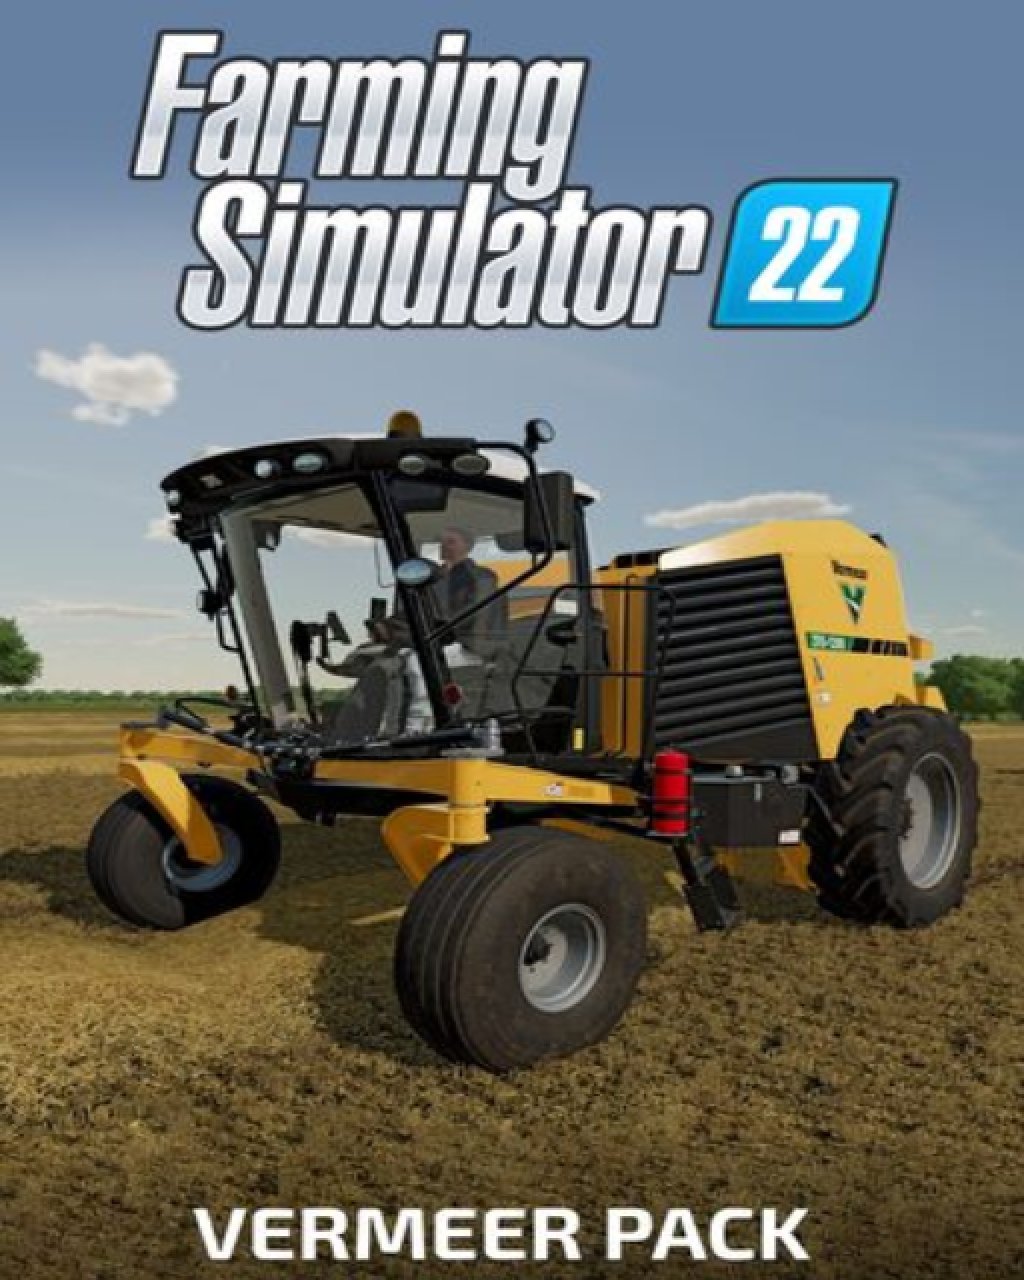 ESD Farming Simulator 22 Vermeer Pack